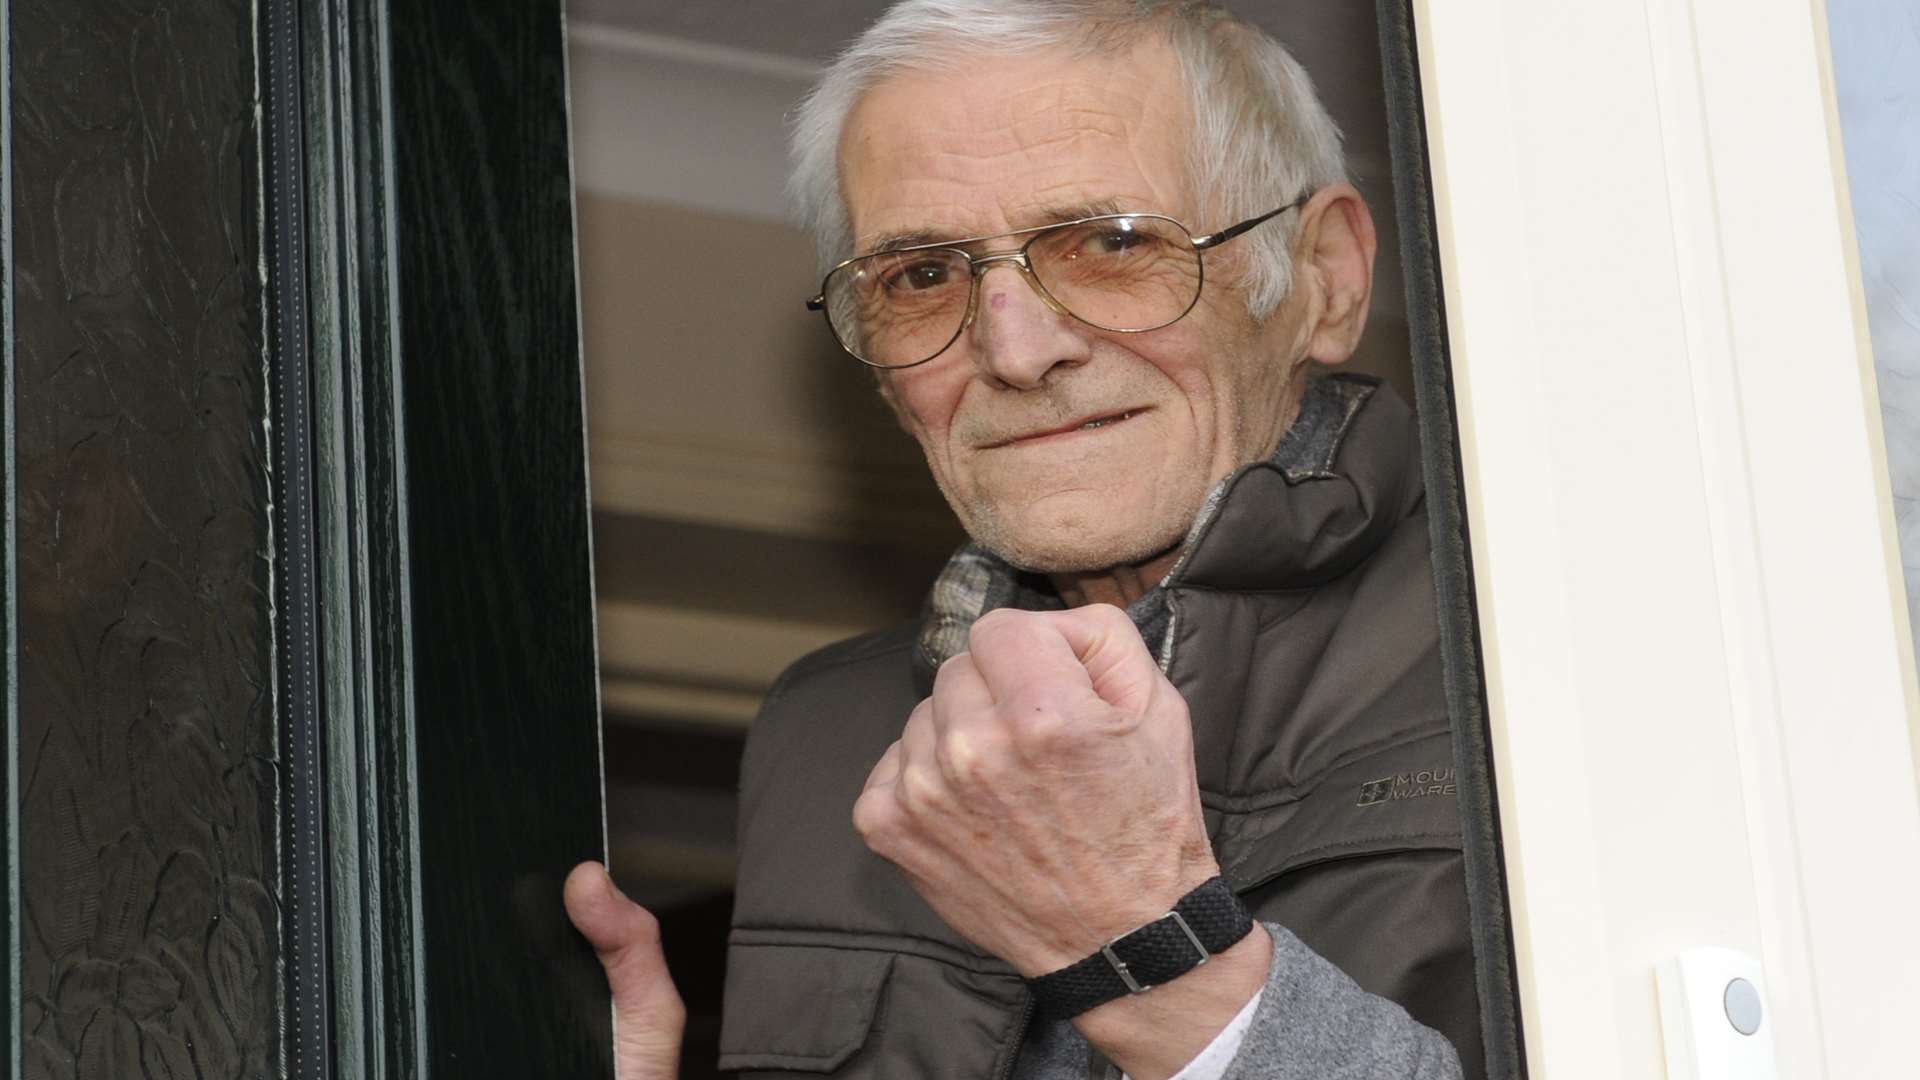 Pensioner Bob Ulldemolins fell victim to a cold caller